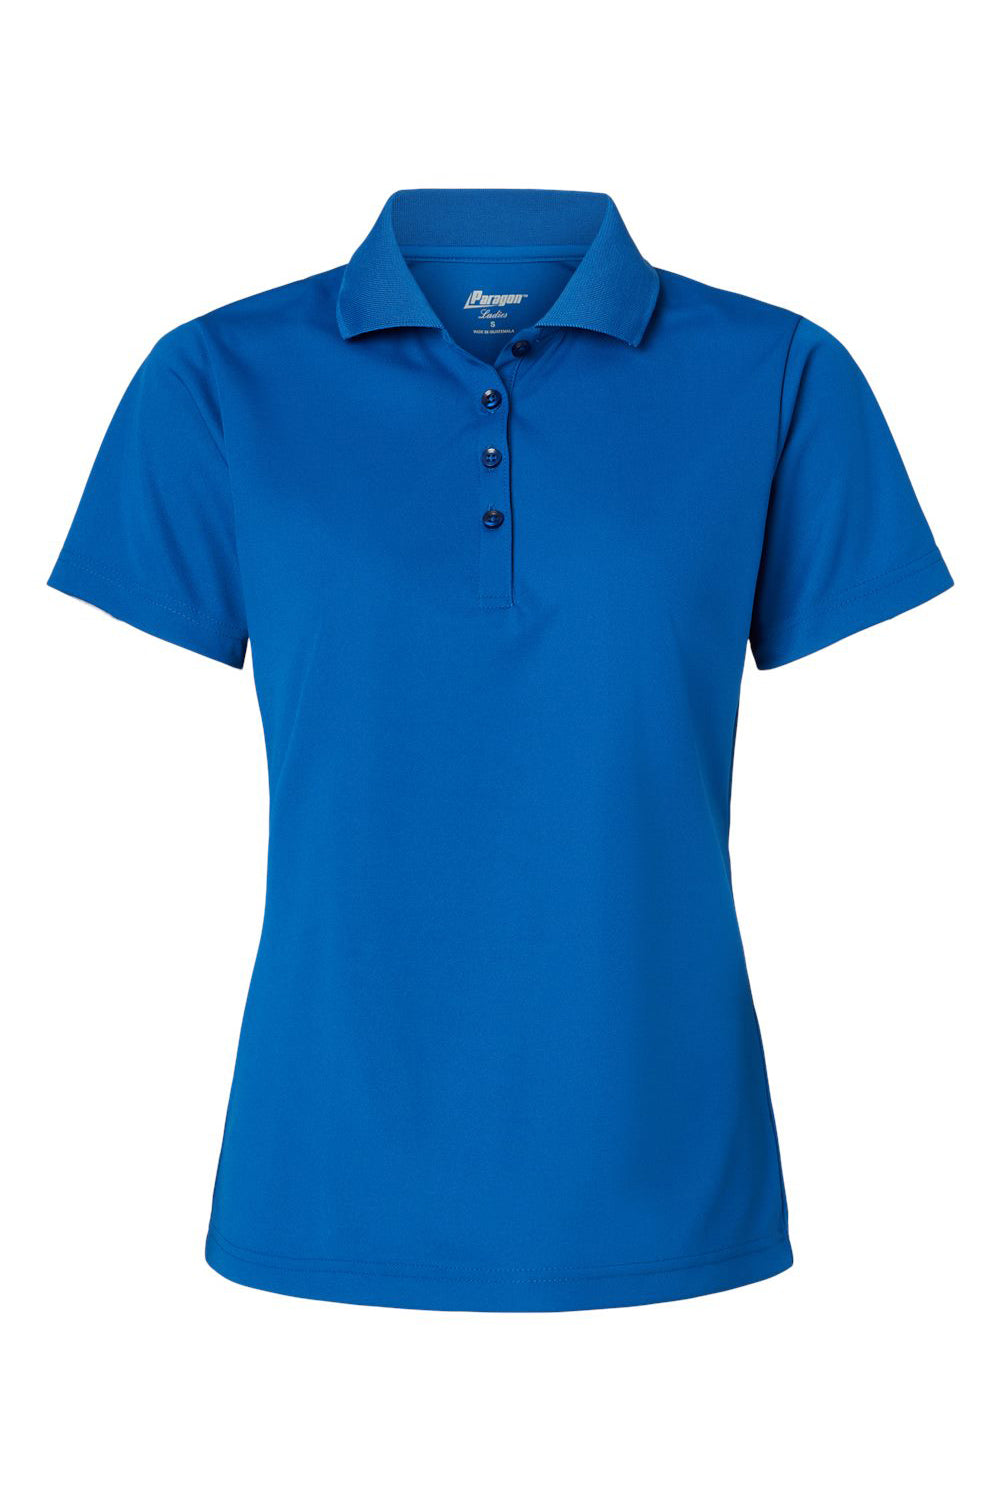 Paragon 504 Womens Sebring Performance Short Sleeve Polo Shirt Deep Royal Blue Flat Front